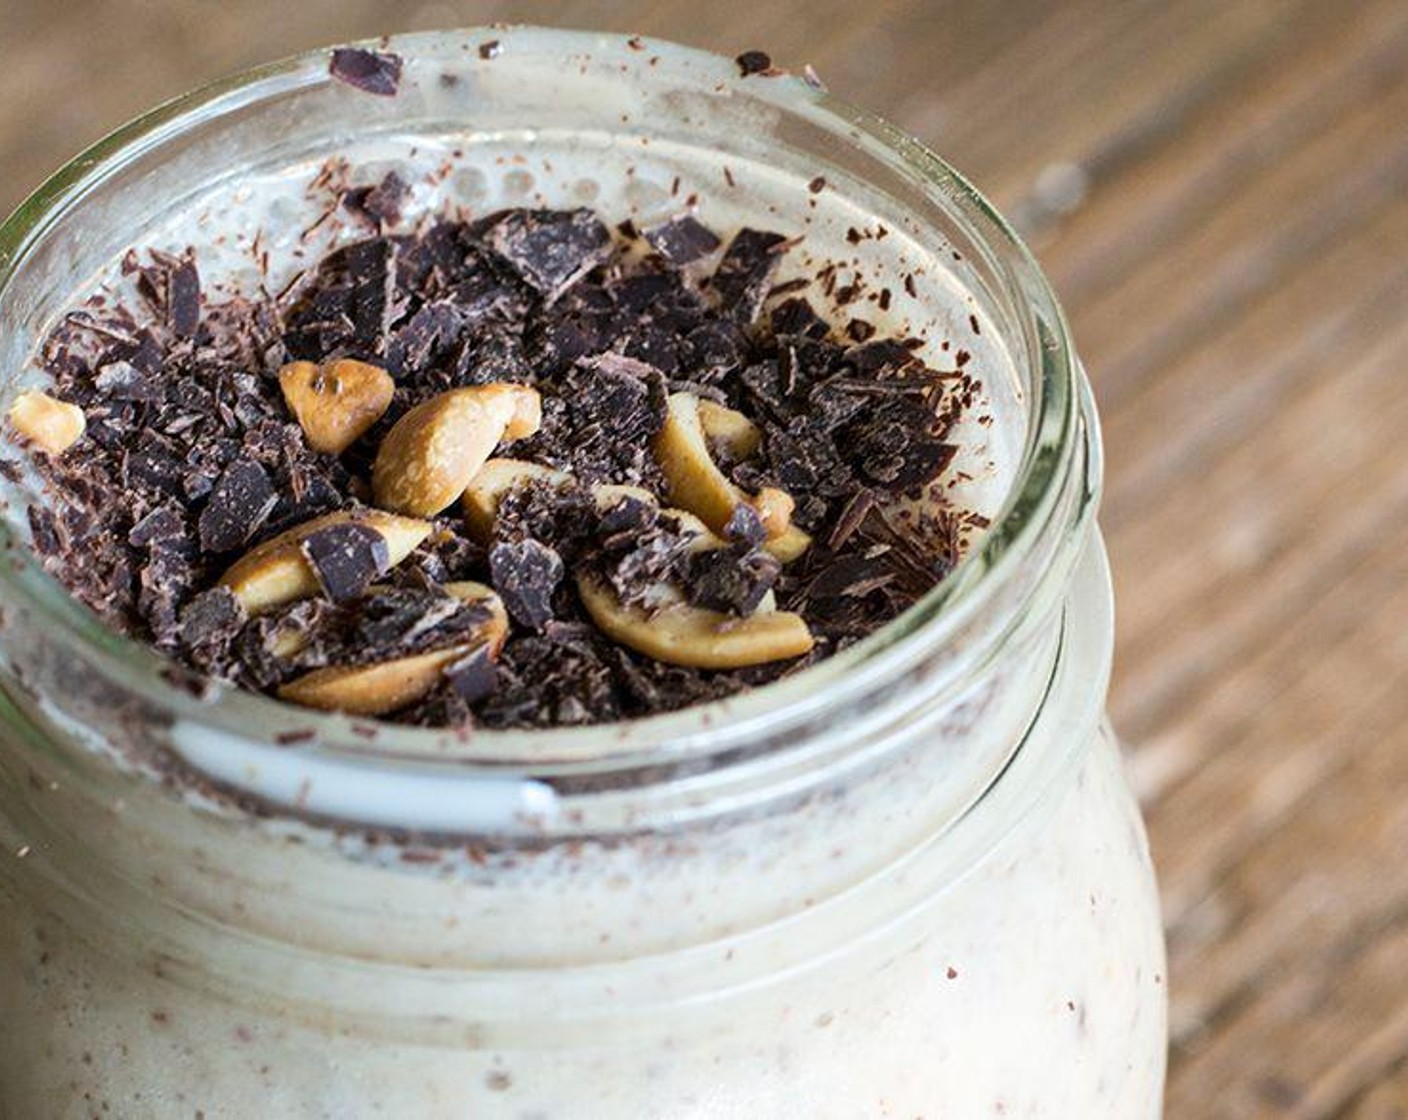 step 3 Sprinkle with dark chocolate shavings and/or Peanuts (to taste). Serve and enjoy!